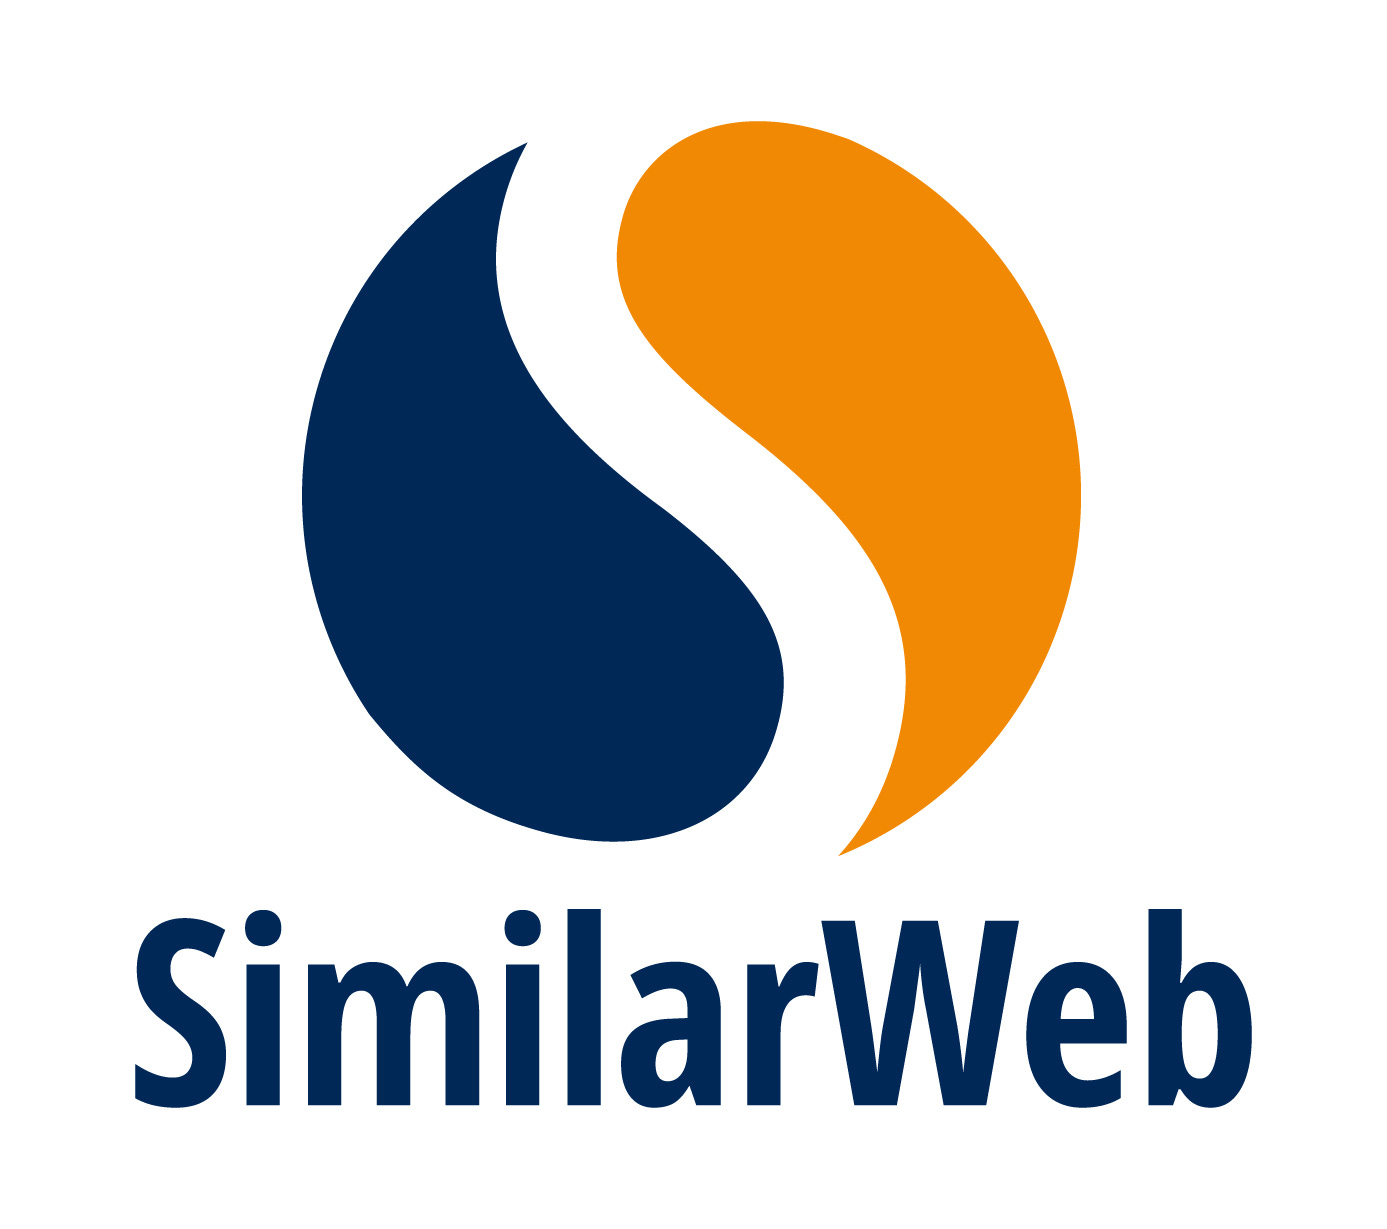 SimilarWeb Logo - their website